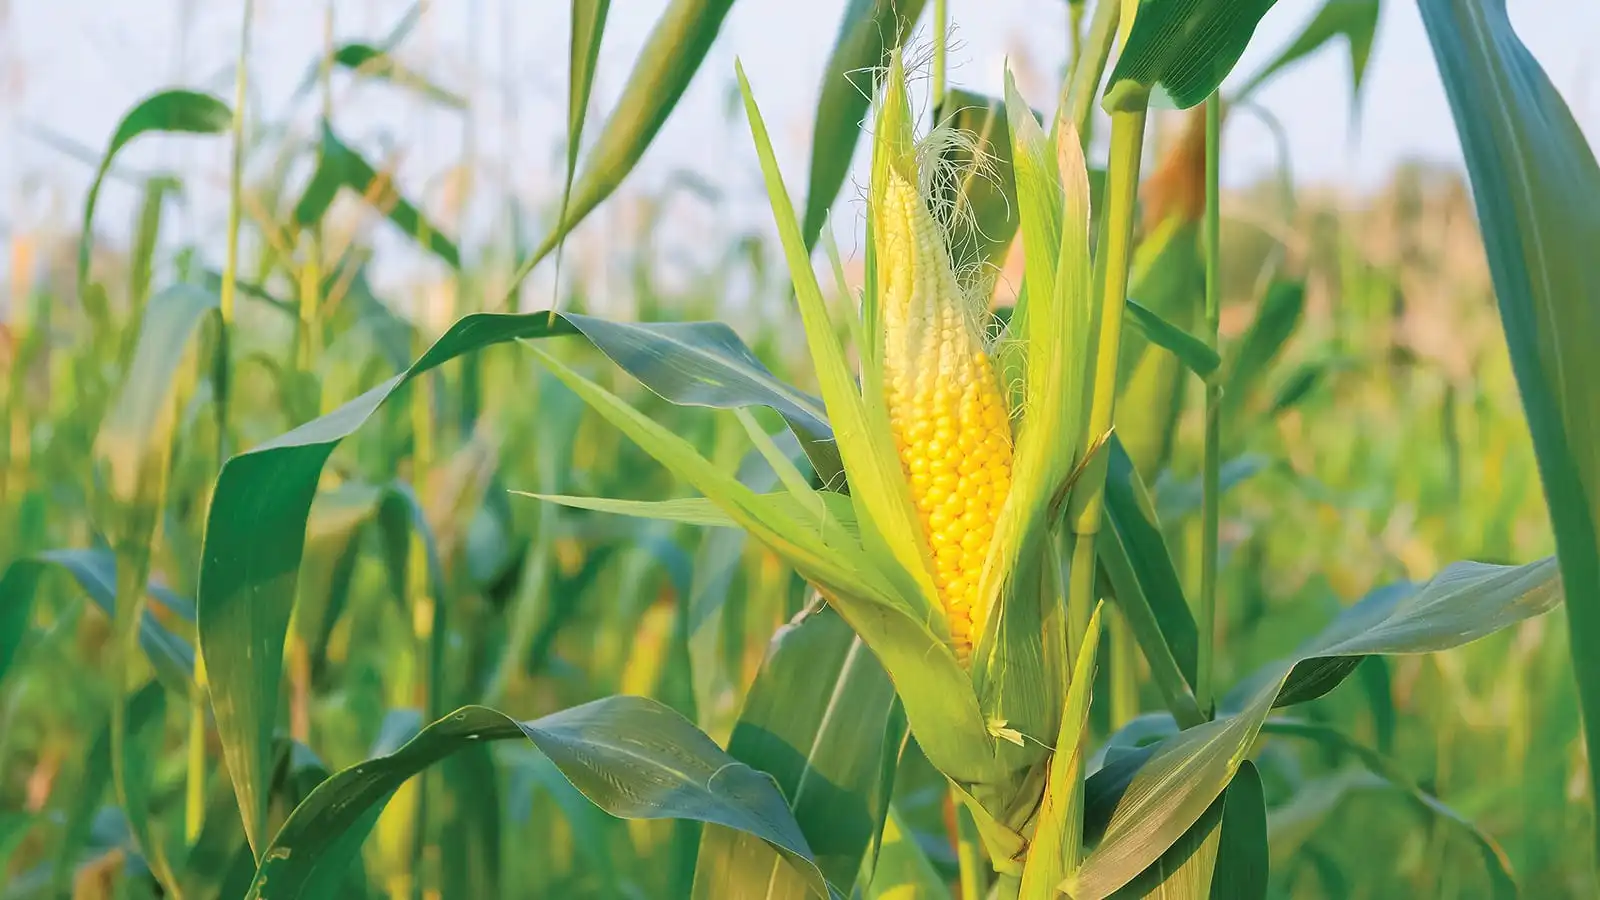 A Heartwarming Story About a Farmer Who Grows Good Corn